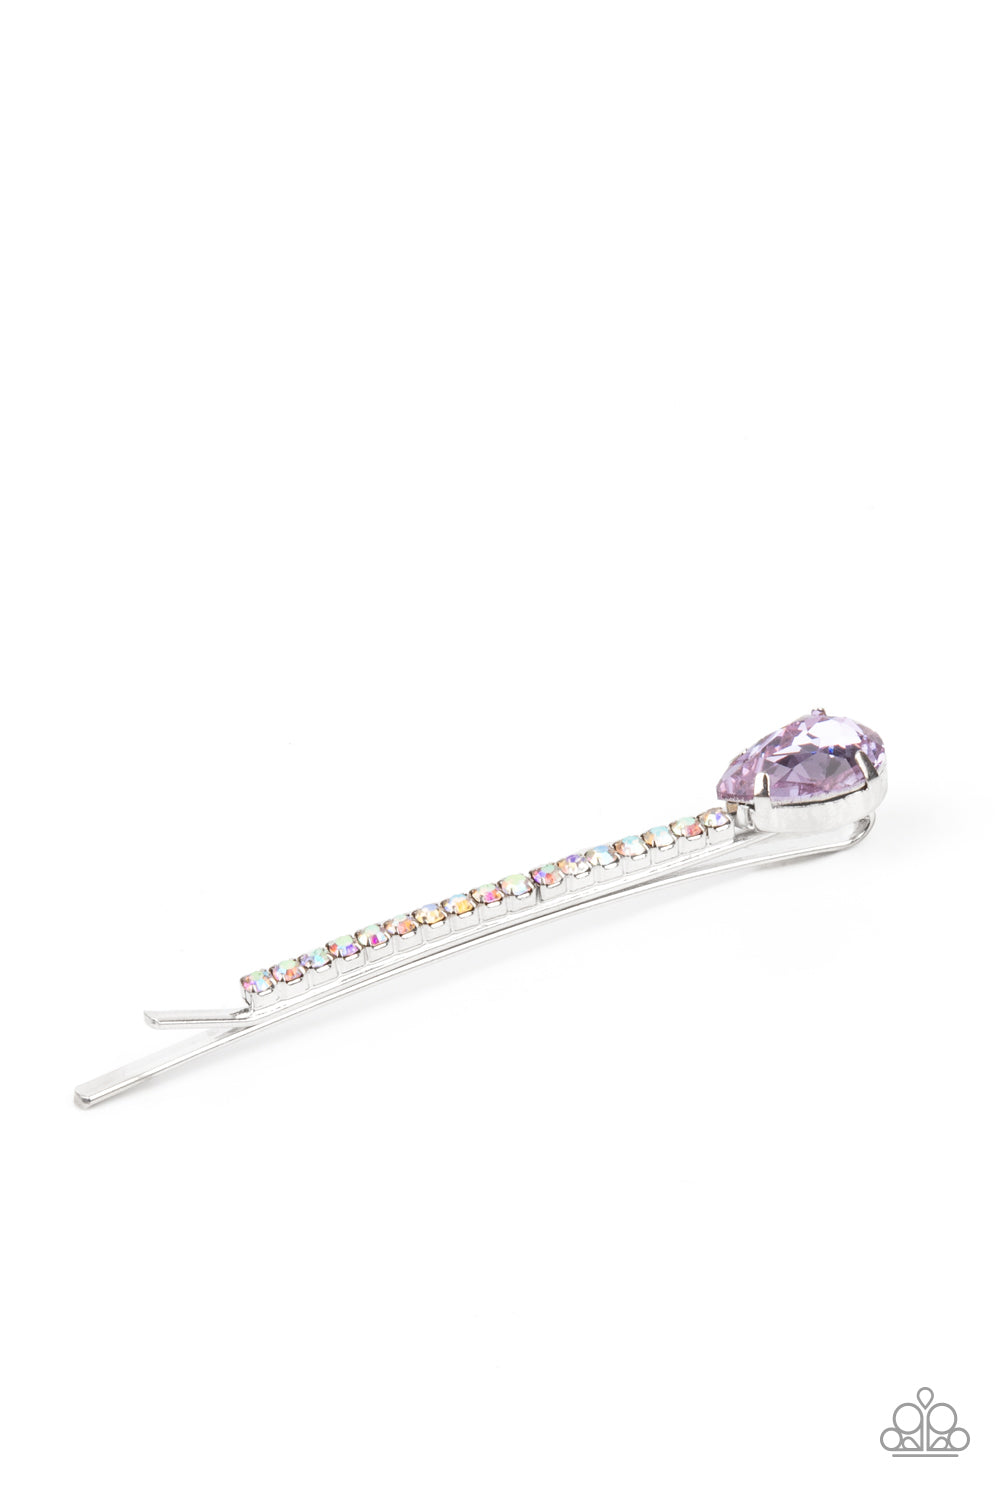 Princess Precision - Purple Hair Pin - Princess Glam Shop